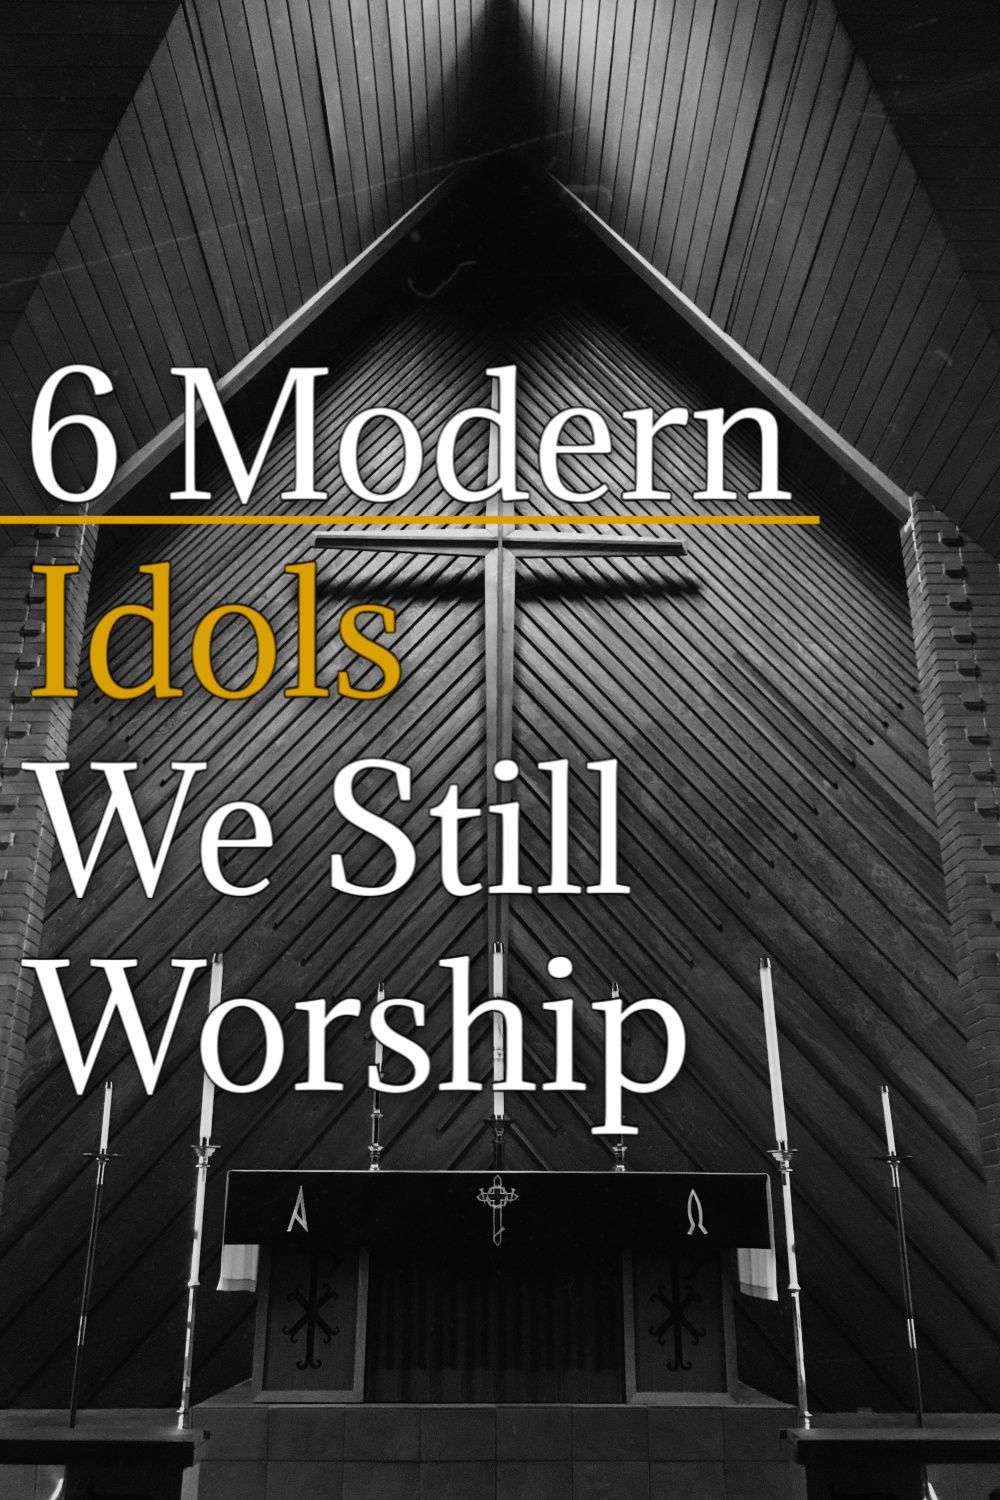 6 Modern Idols We Still Worship